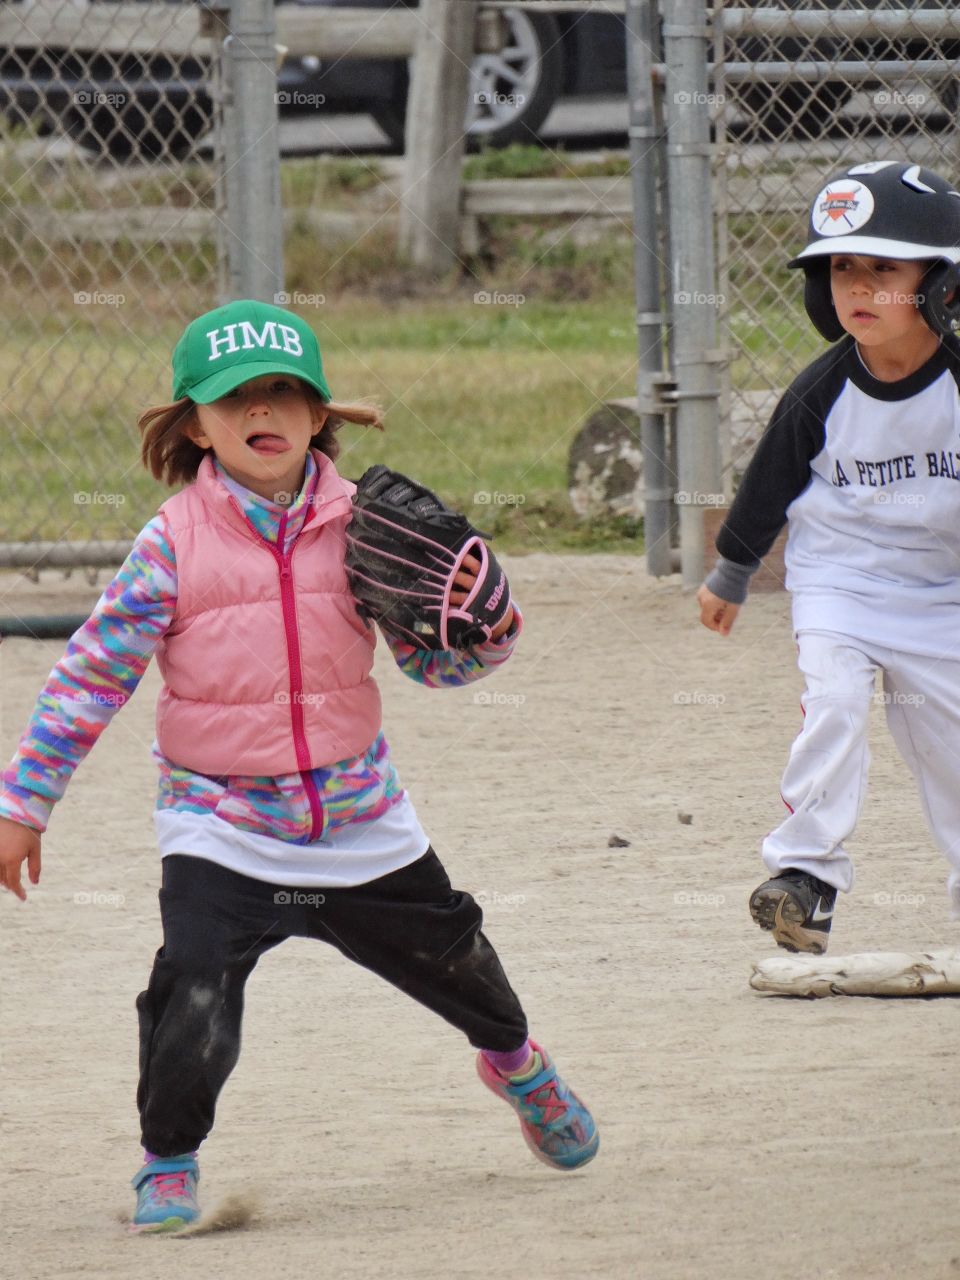 Boy And Girl Playing Baseball. American Children Playing Little League Baseball
